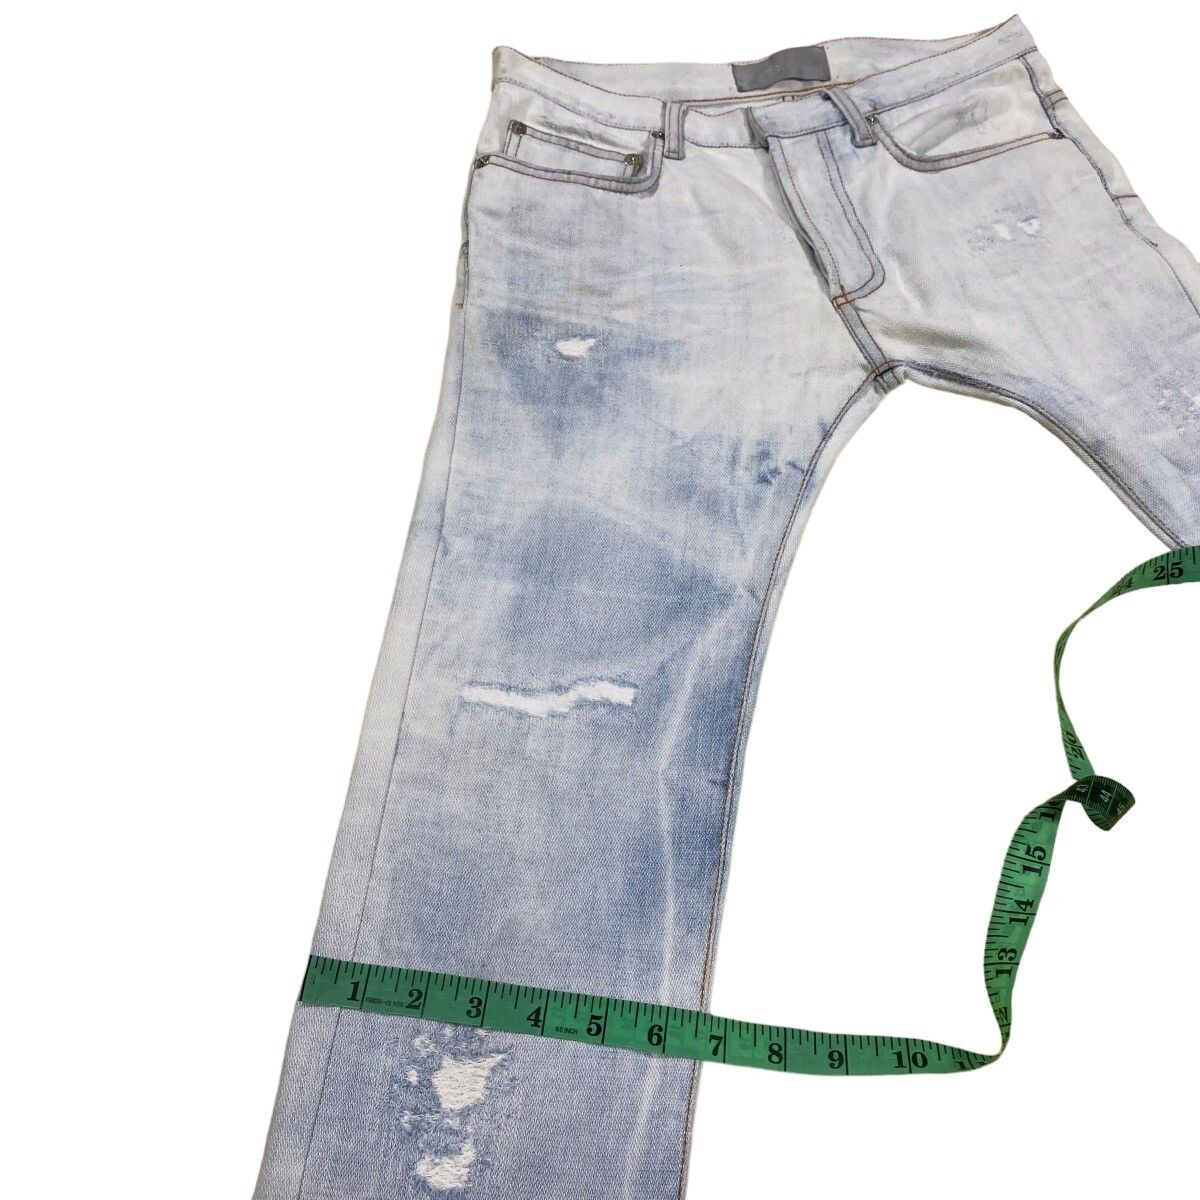 Dior Homme SS06 Dirty Snow Denim Jeans - 22